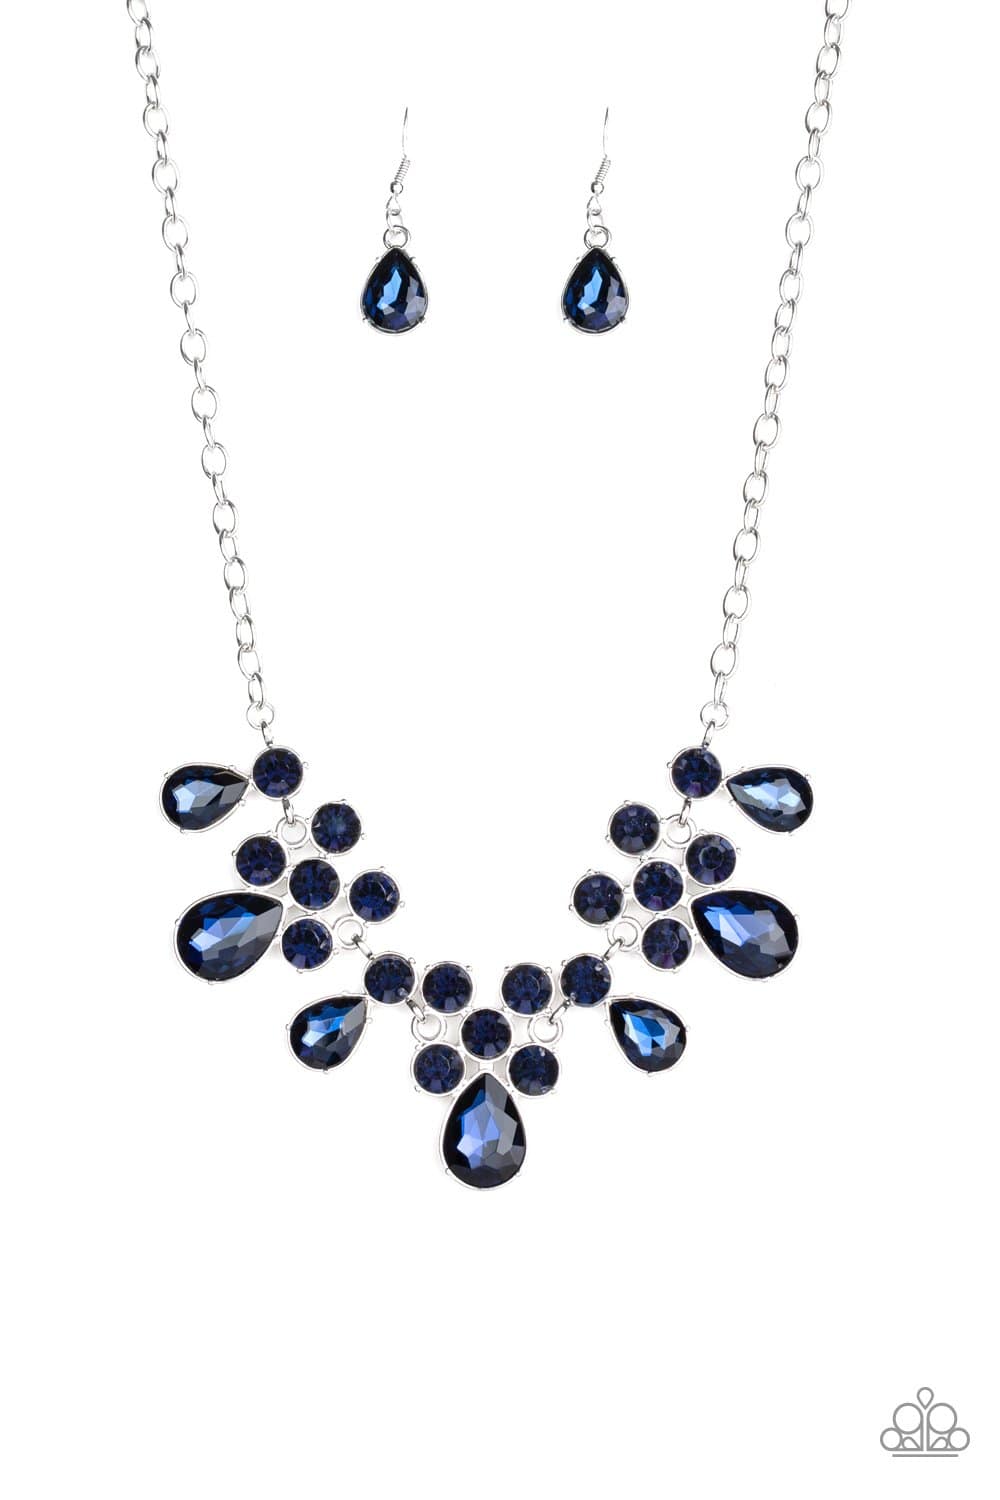 Debutante Drama - Blue Rhinestone Necklace - Paparazzi Accessories - GlaMarous Titi Jewels